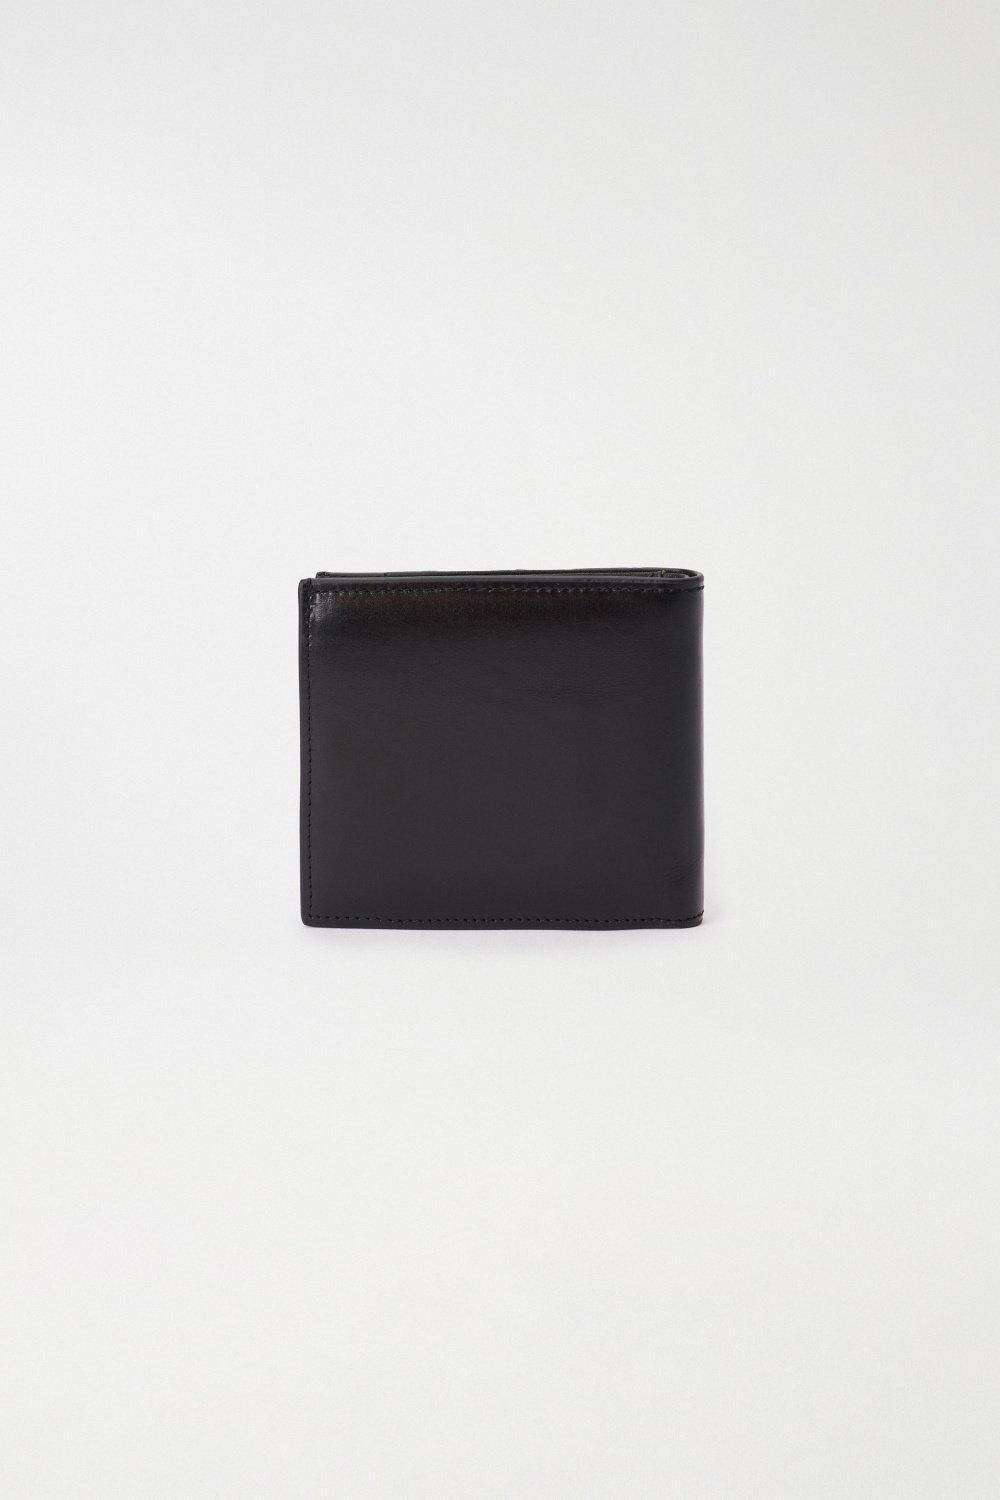 Salsa Jeans - Black Leather Wallet